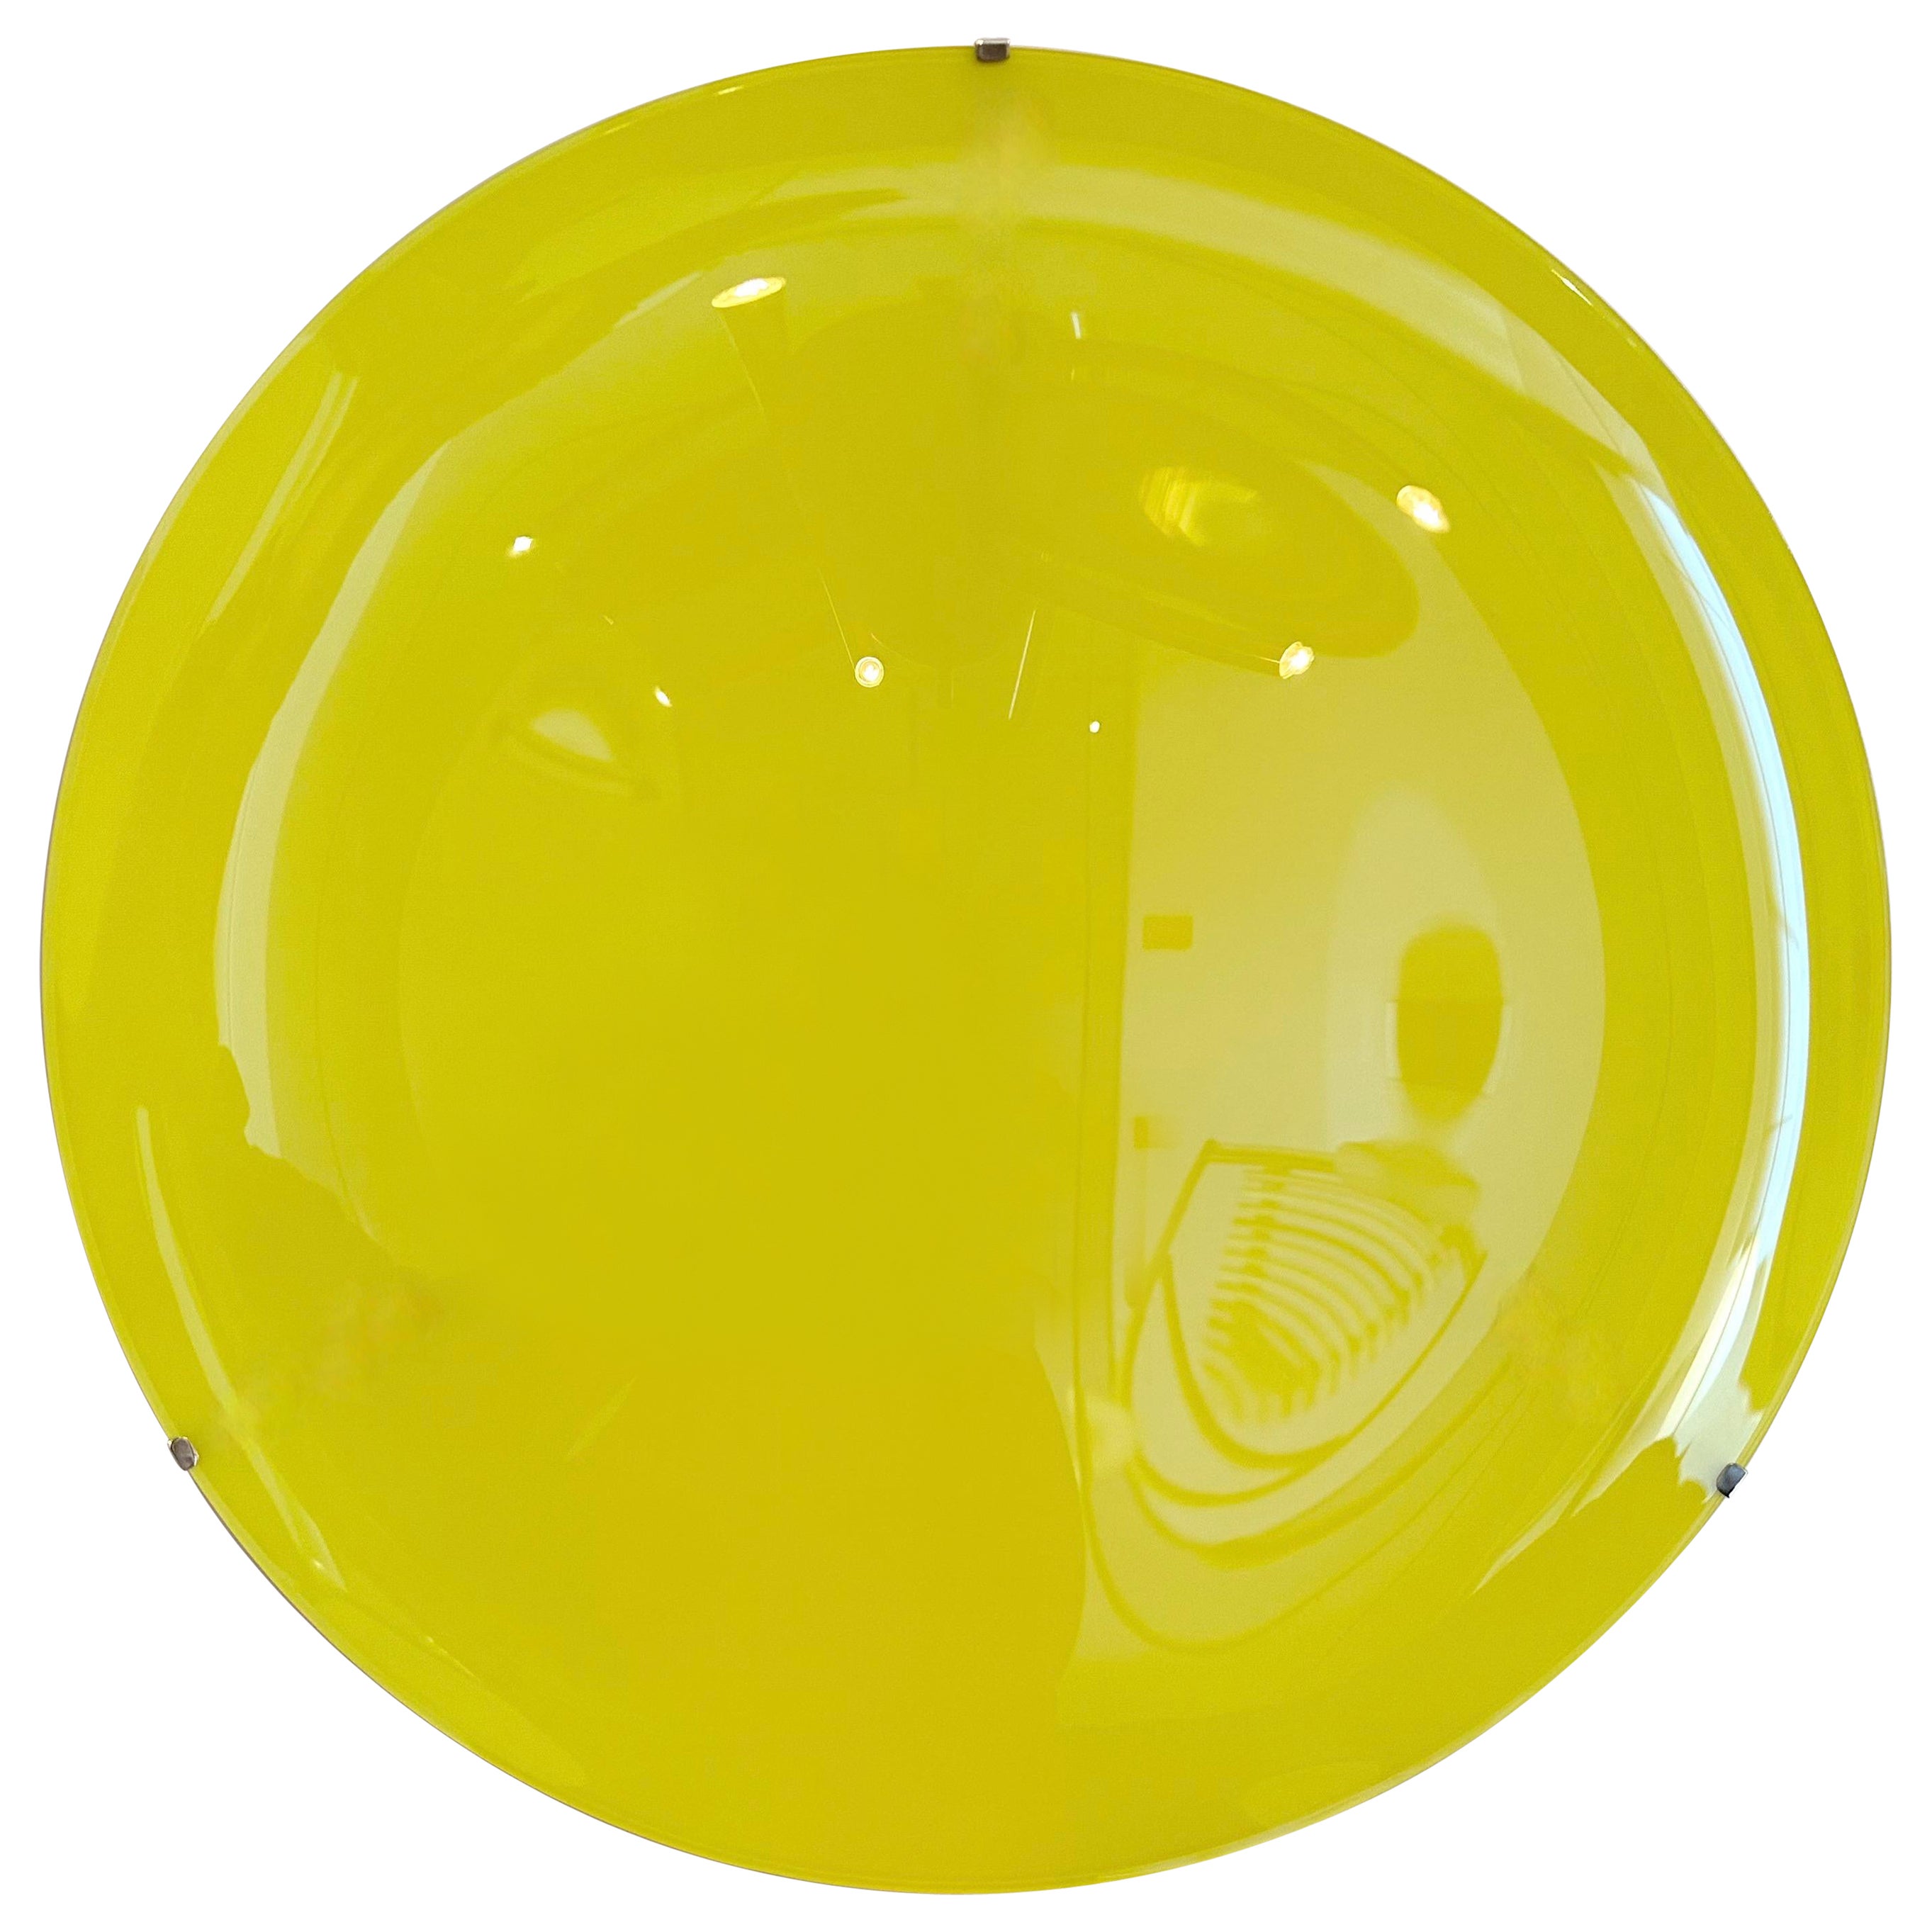 Grand miroir contemporain jaune concave courbé, Italie